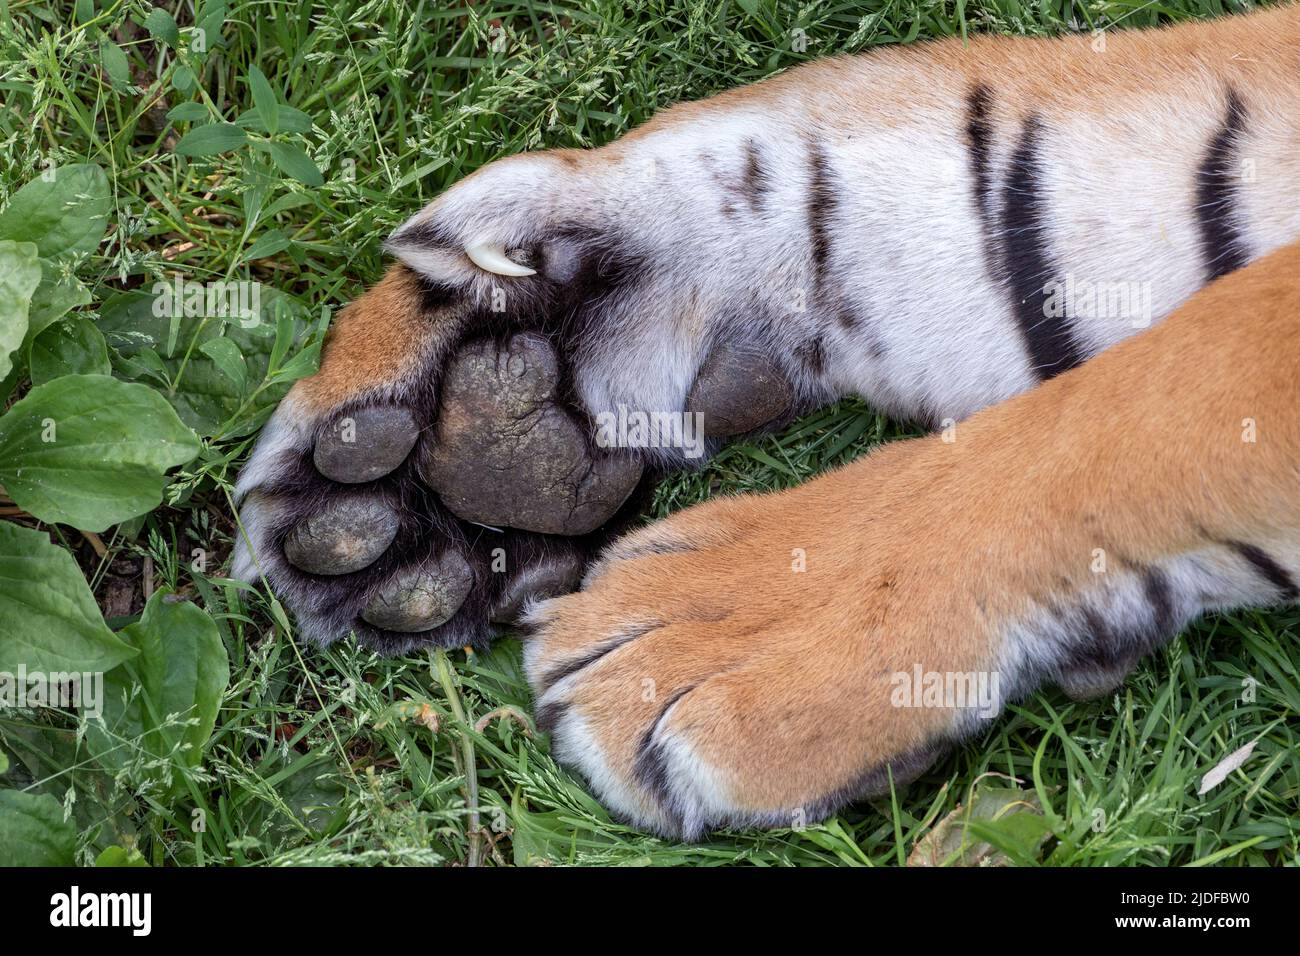 Hind paw of adult Sumatran tiger Stock Photo